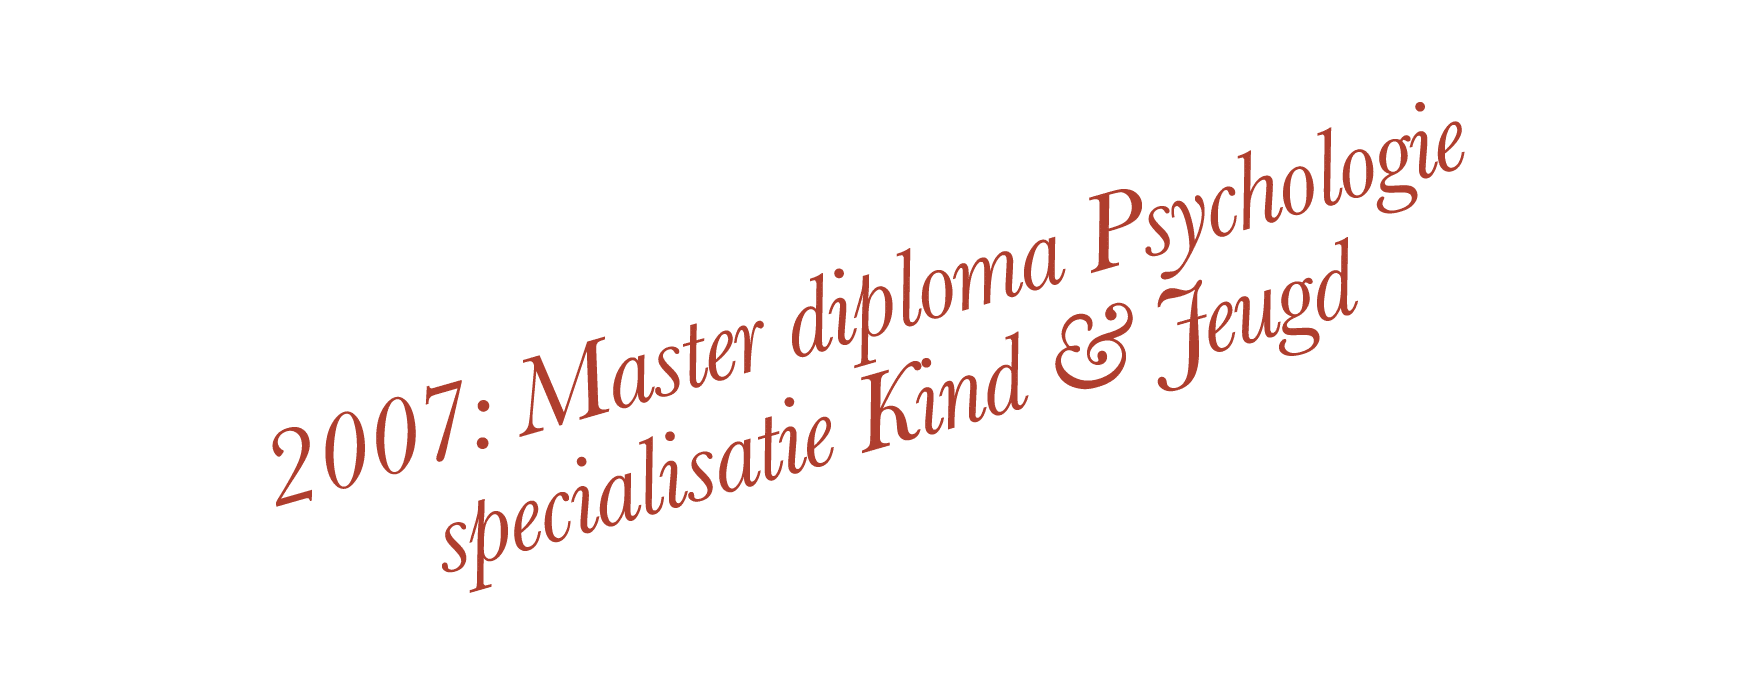 2007: Master diploma Psychologie specialisatie Kind & Jeugd